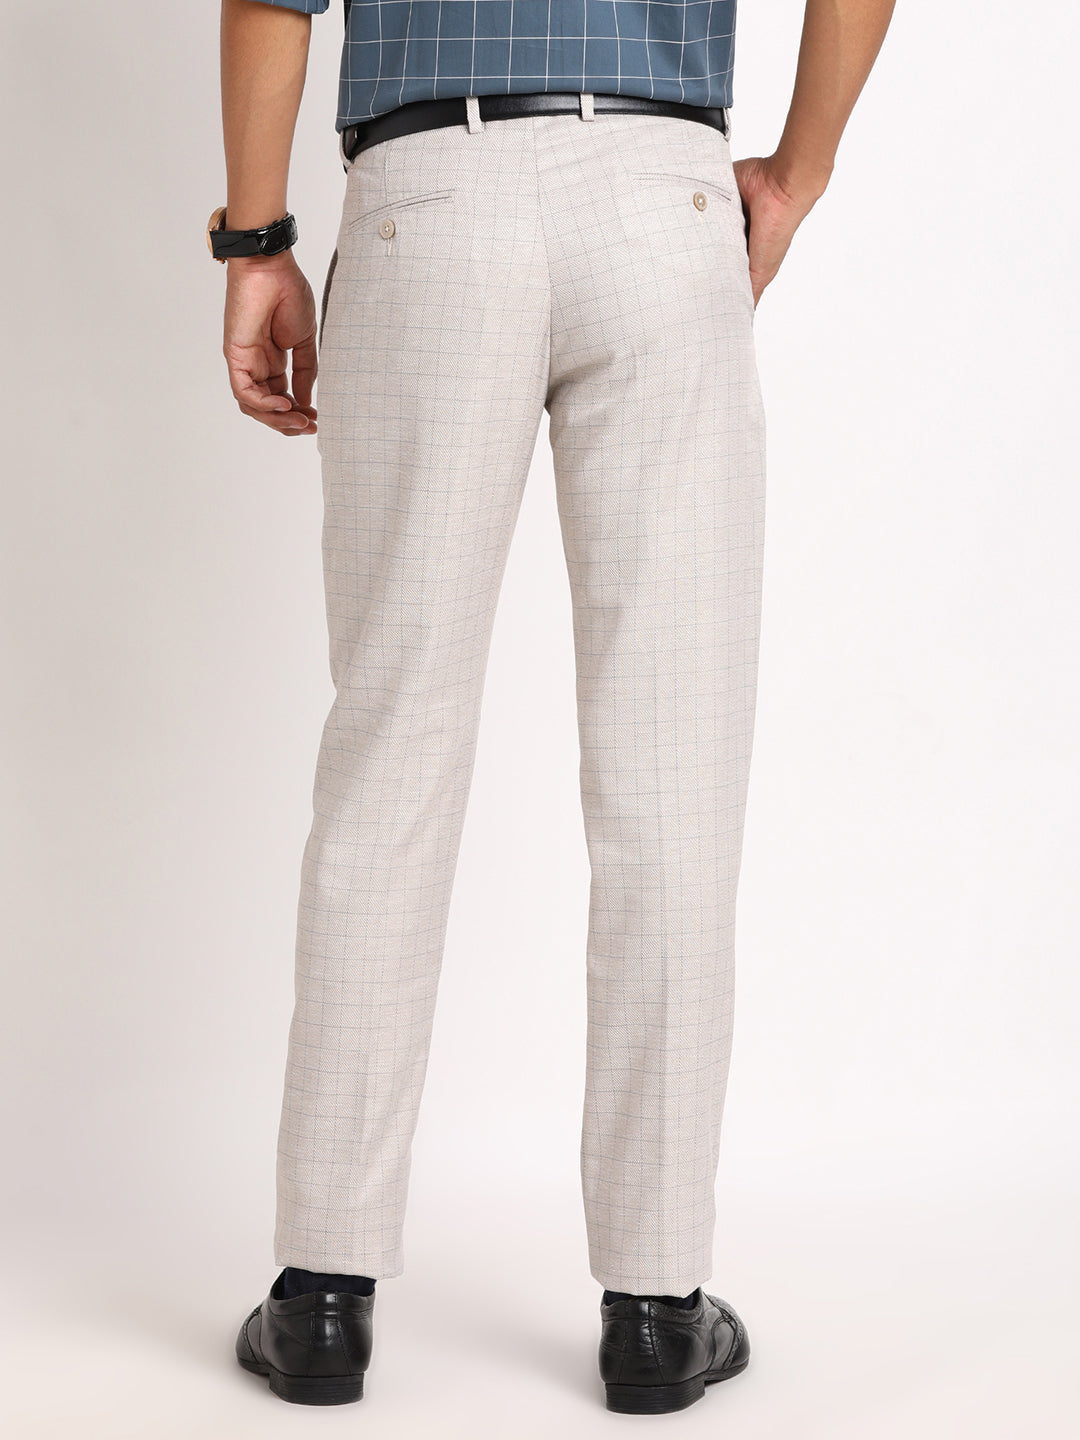 Mens Clothing Armani Exchange, Style code: 8nzpp1-znpmz-2240 | Mens  outfits, Mens pants, Armani